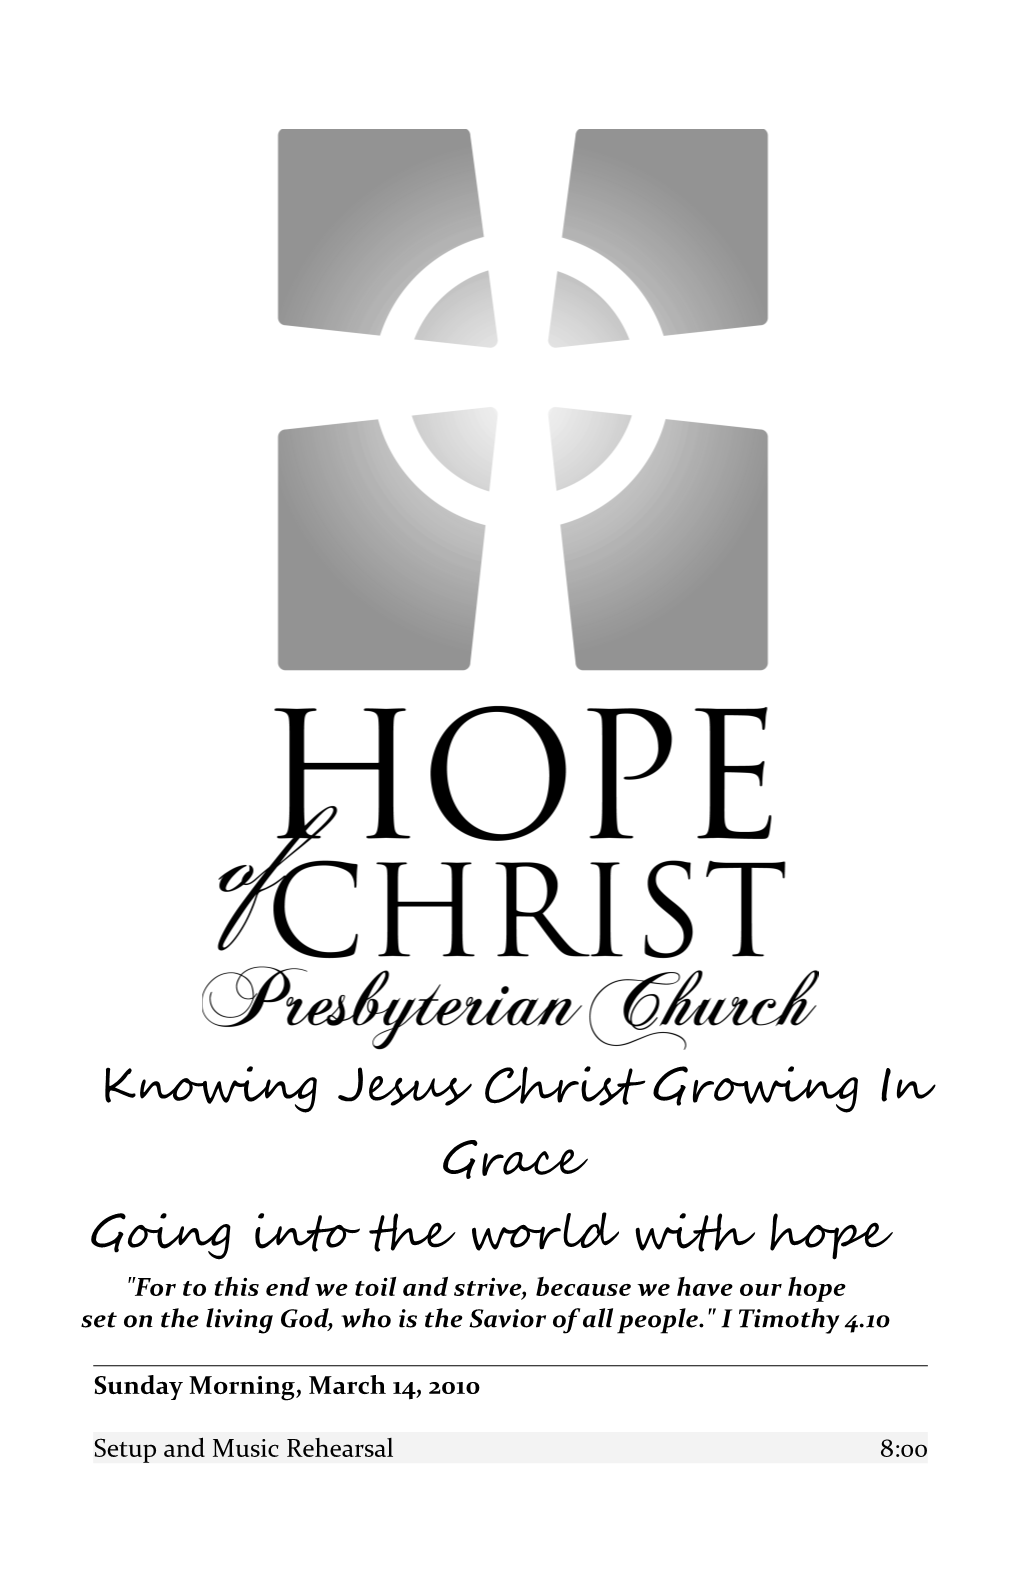 Knowing Jesus Christgrowing in Grace